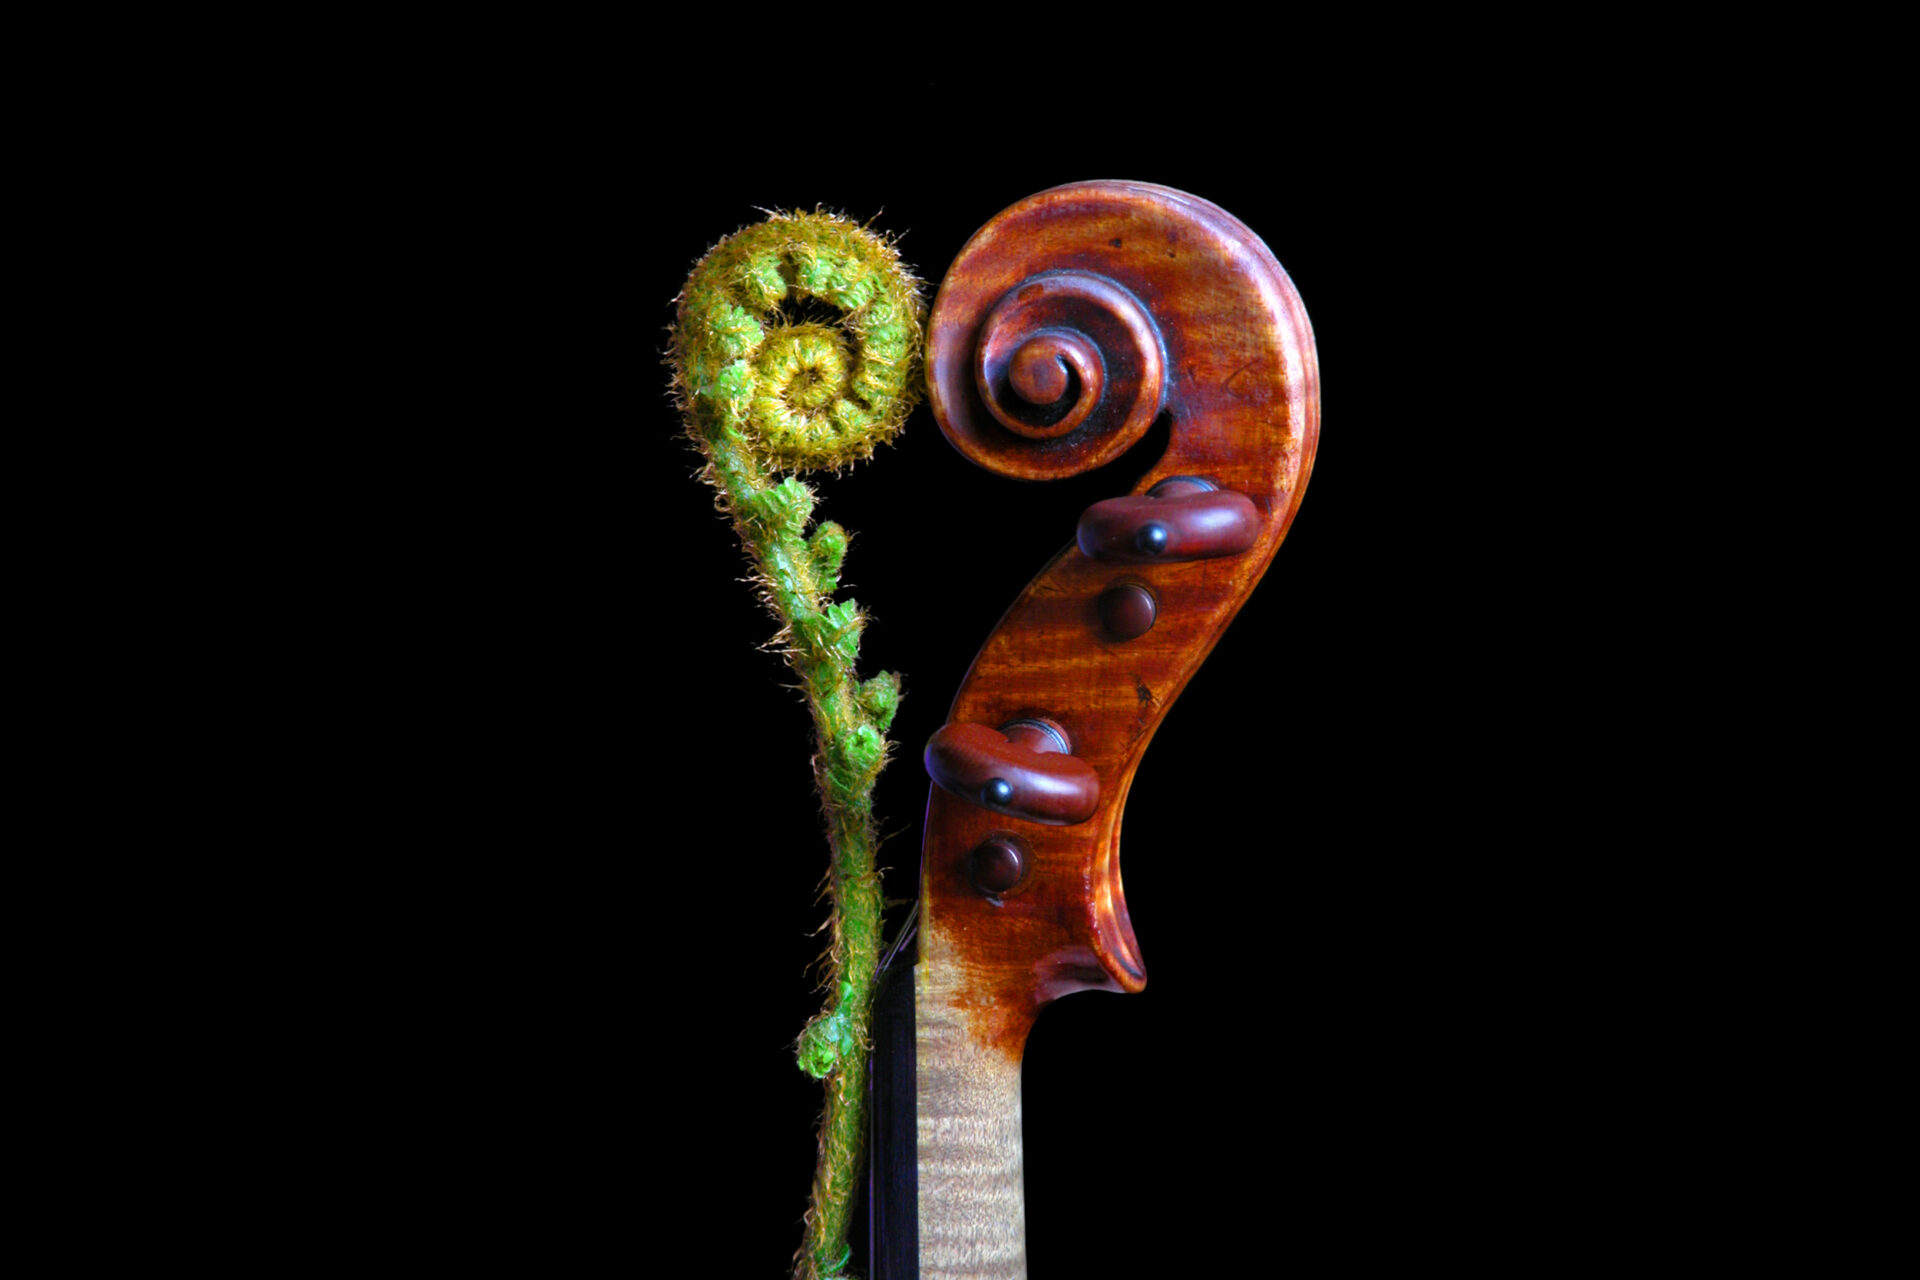 A fiddlehead fern placed against the head of a violin